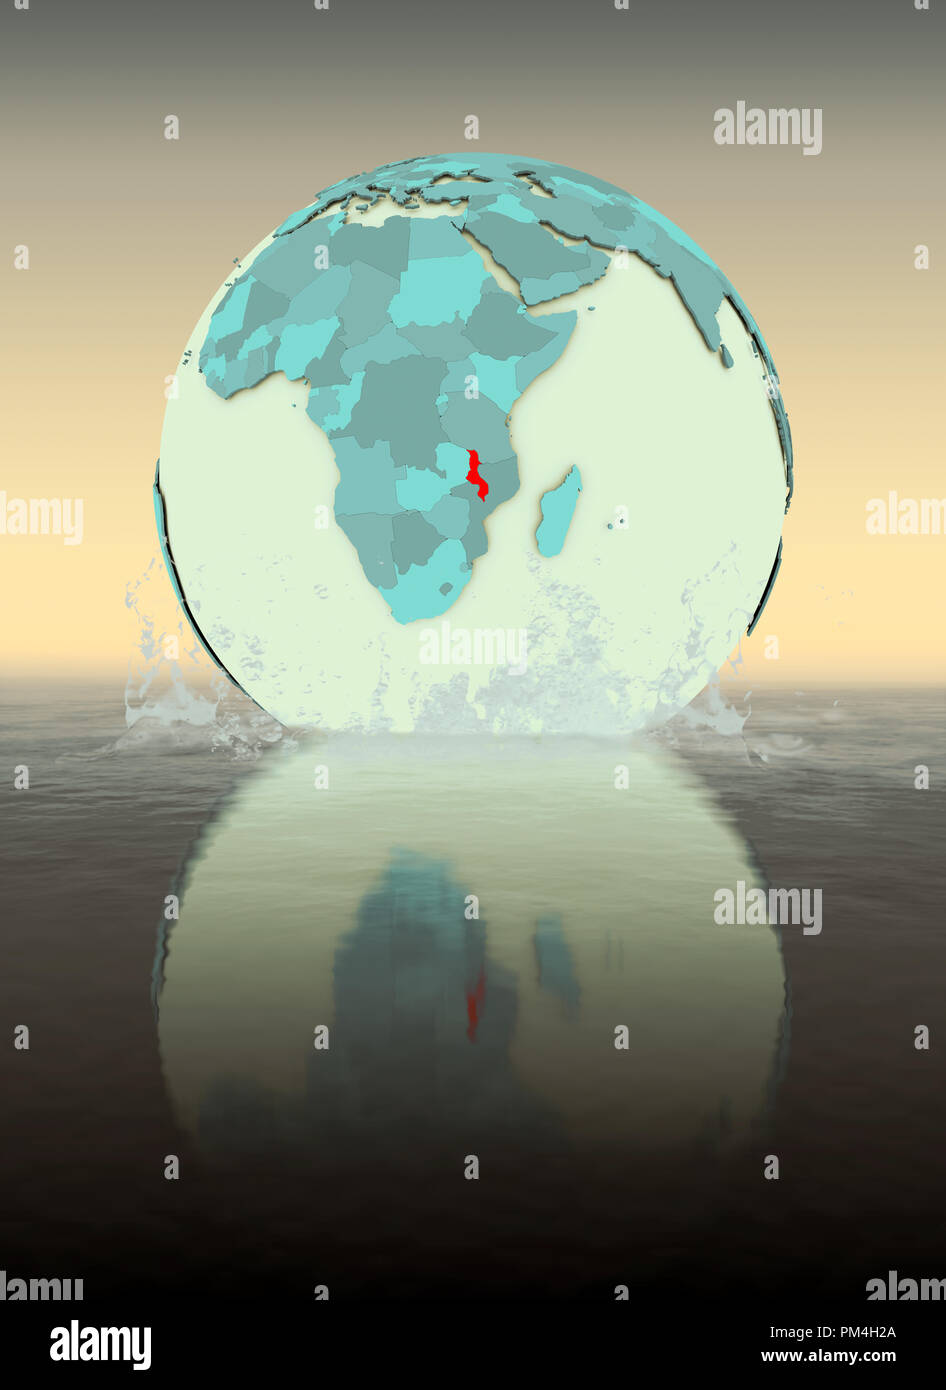 Malawi on globe splashed into the water. 3D illustration. Stock Photo